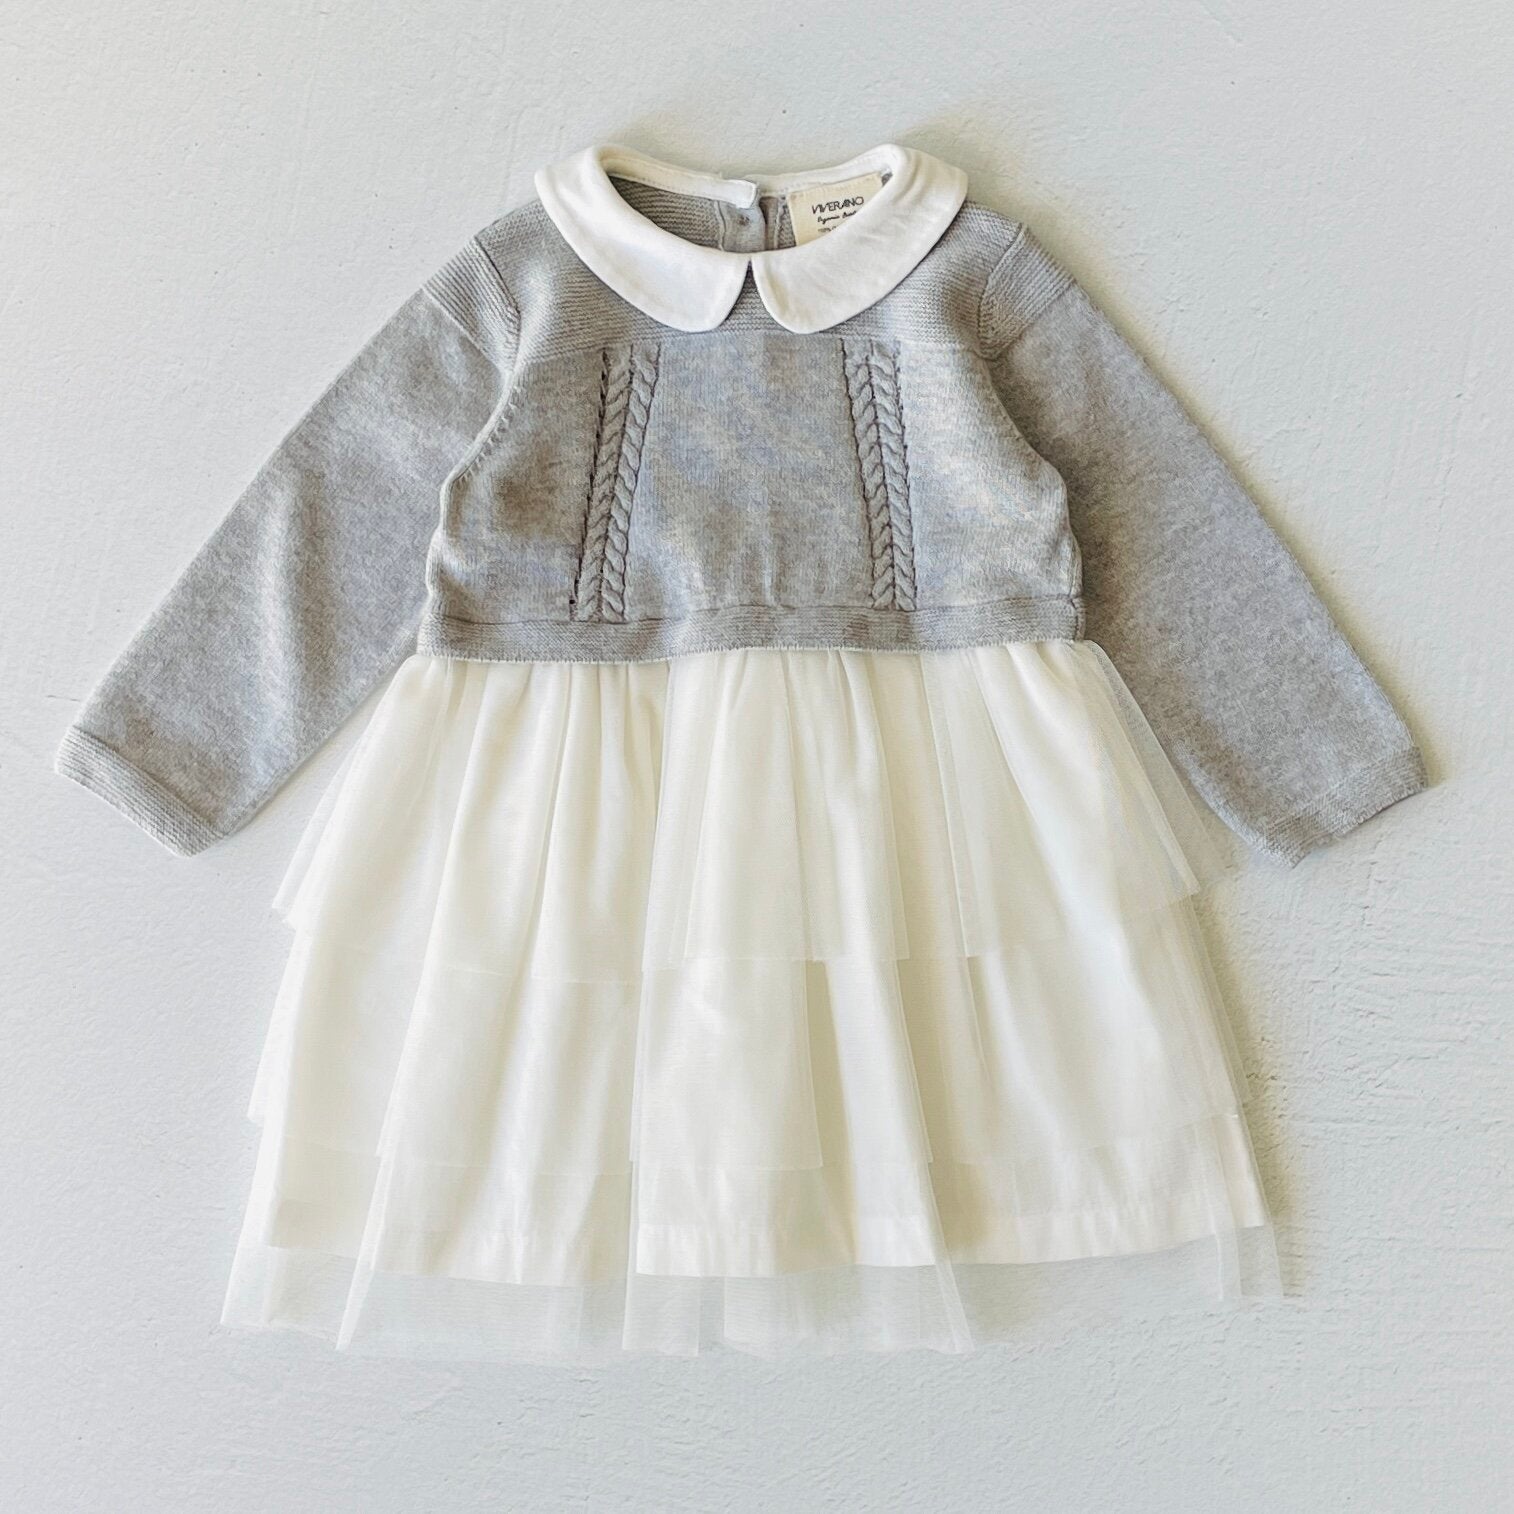 Peter Pan Knit Baby Girl Tutu Dress